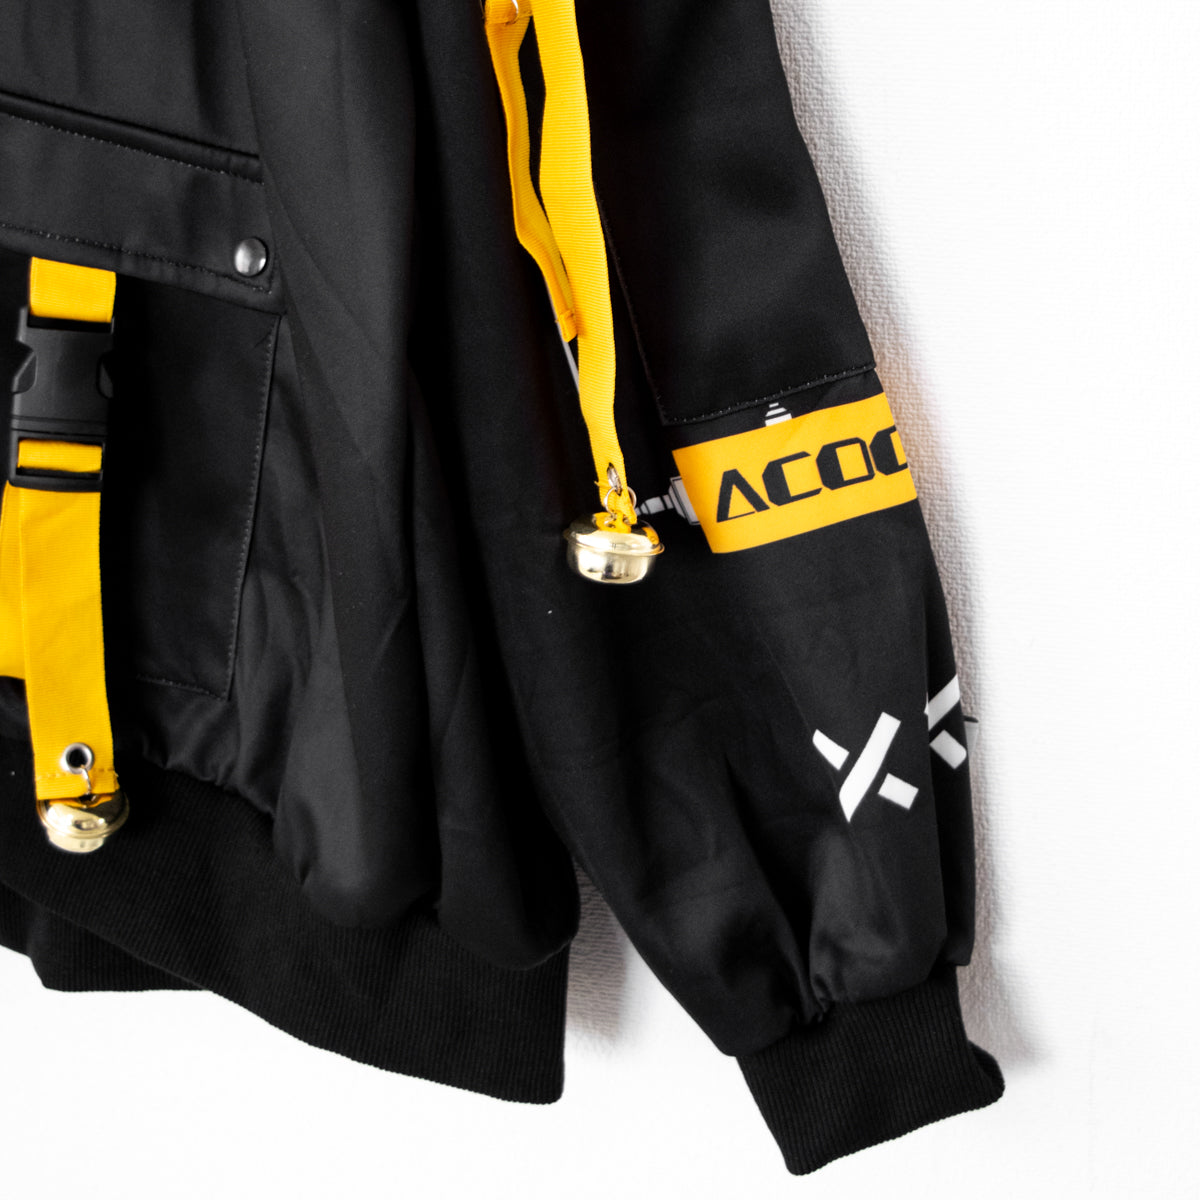 ACDC Rag Error Code Jacket Black Yellow